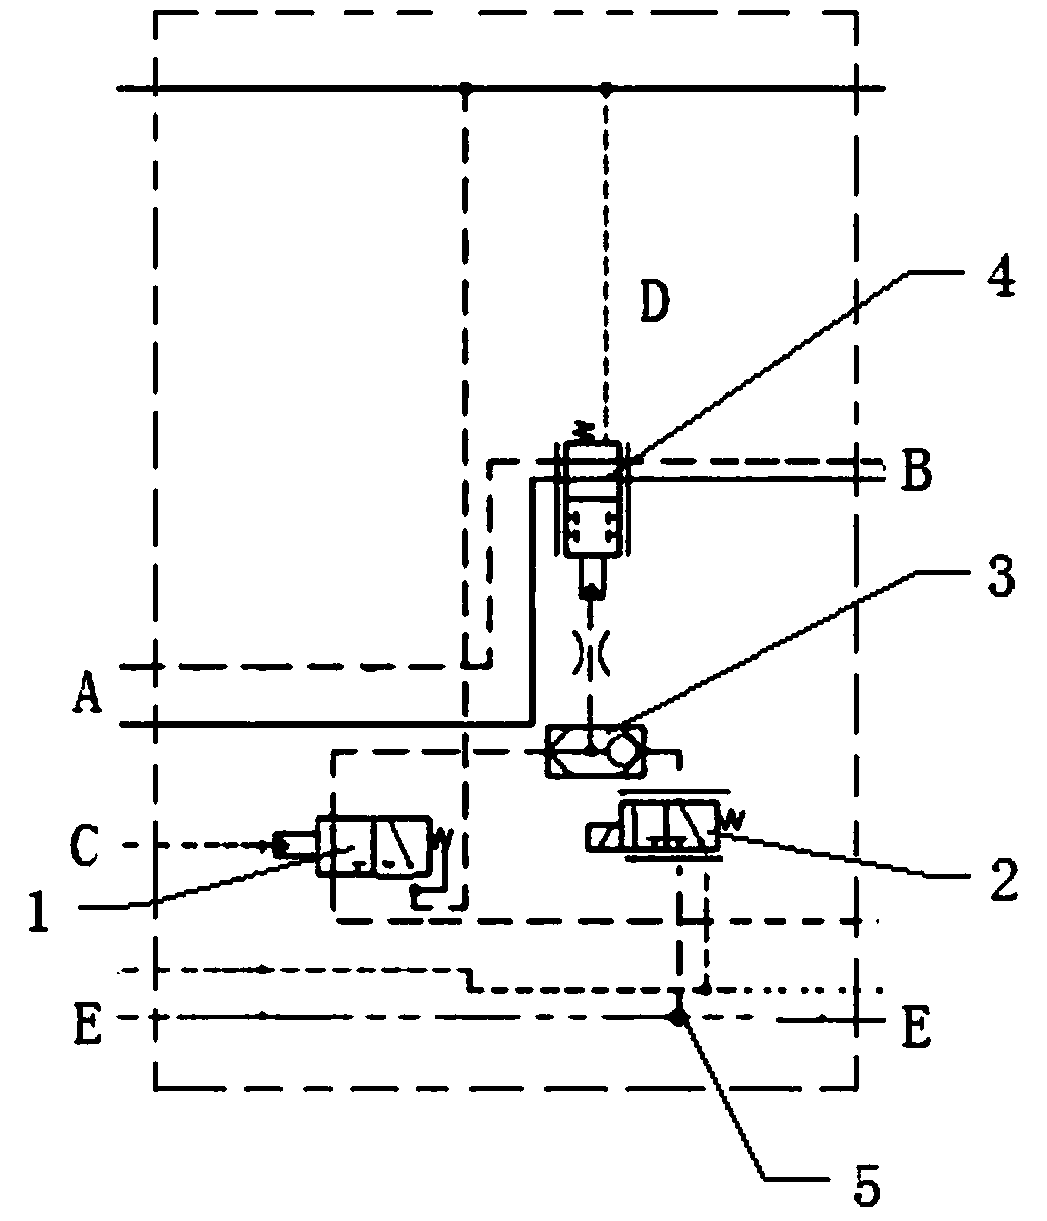 A confluence control device for a hydraulic crane